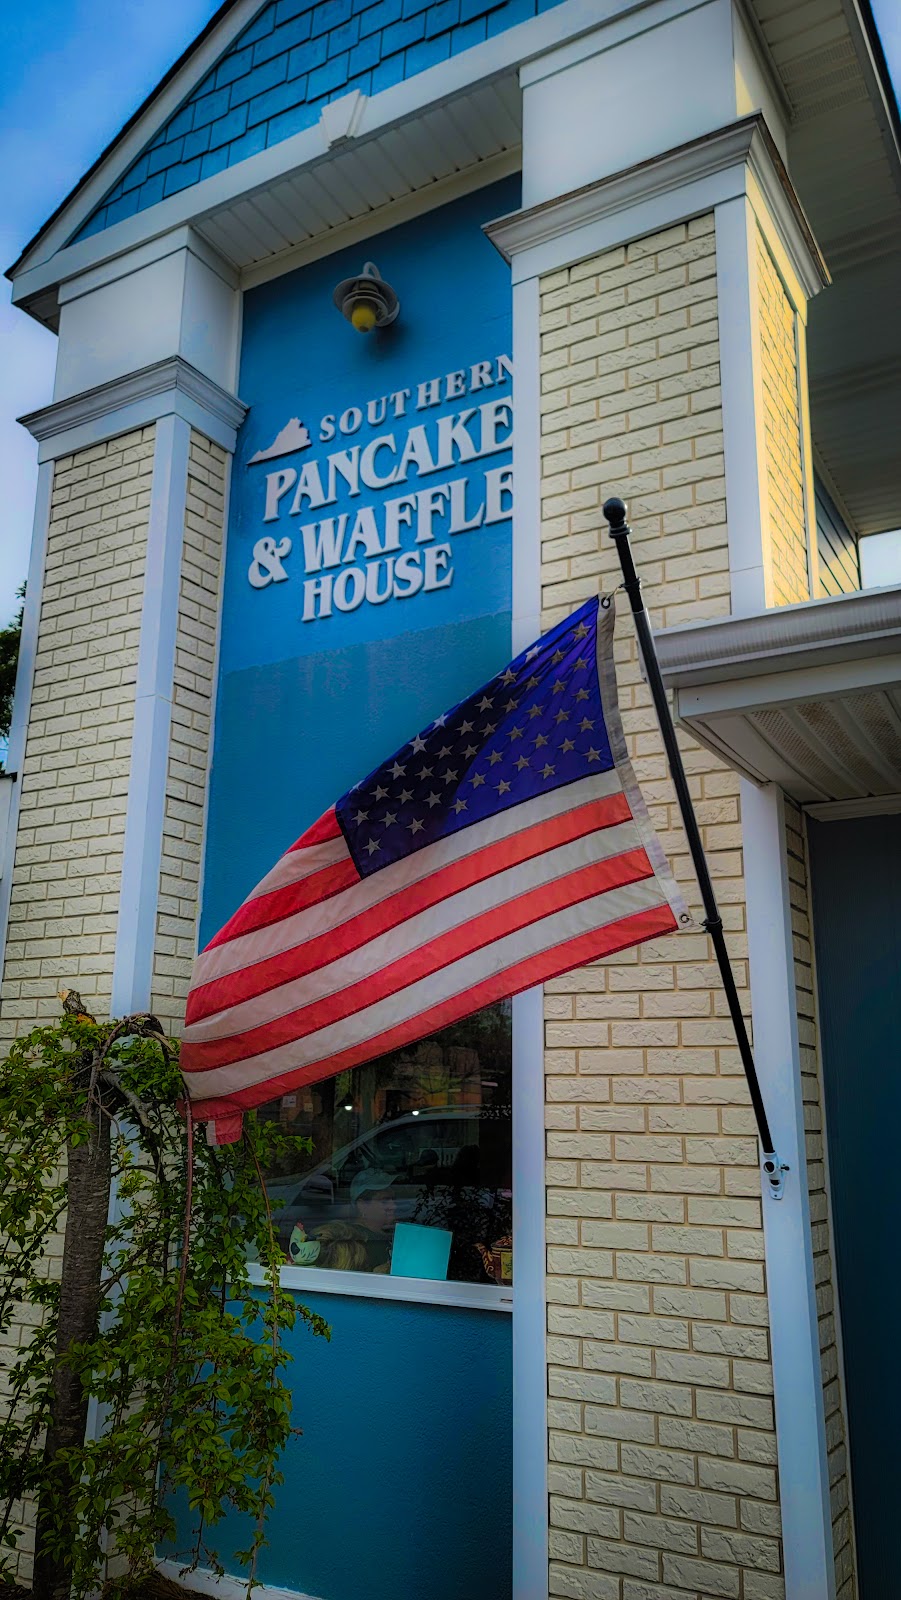 Southern Pancake & Waffle House | 1605 Richmond Rd, Williamsburg, VA 23185, USA | Phone: (757) 220-5542